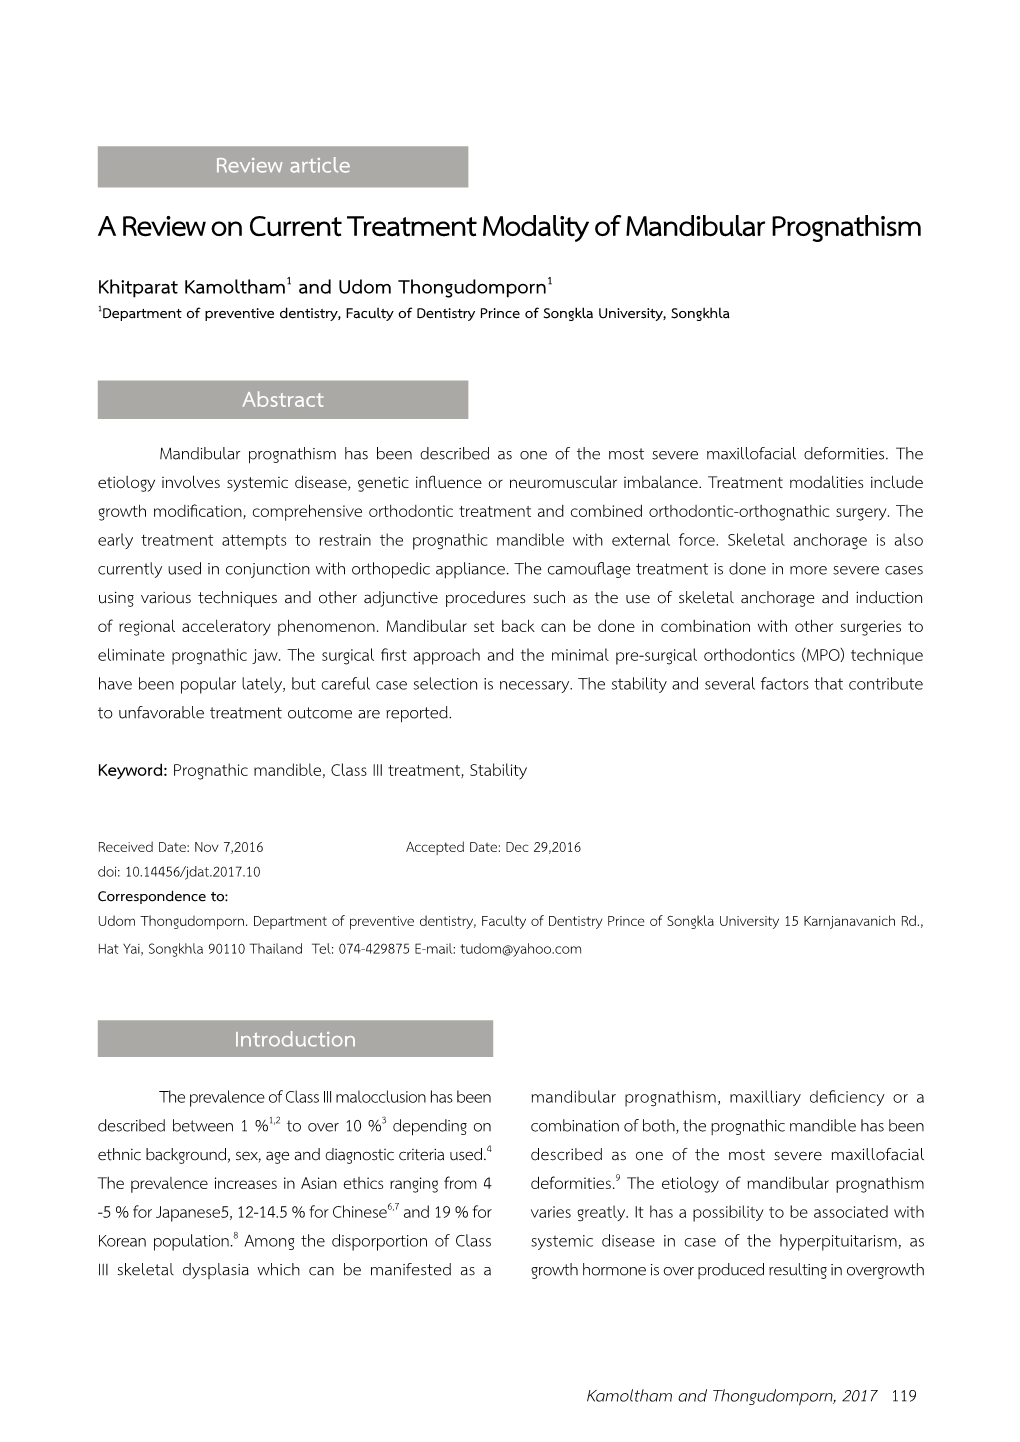 A Review on Current Treatment Modality of Mandibular Prognathism